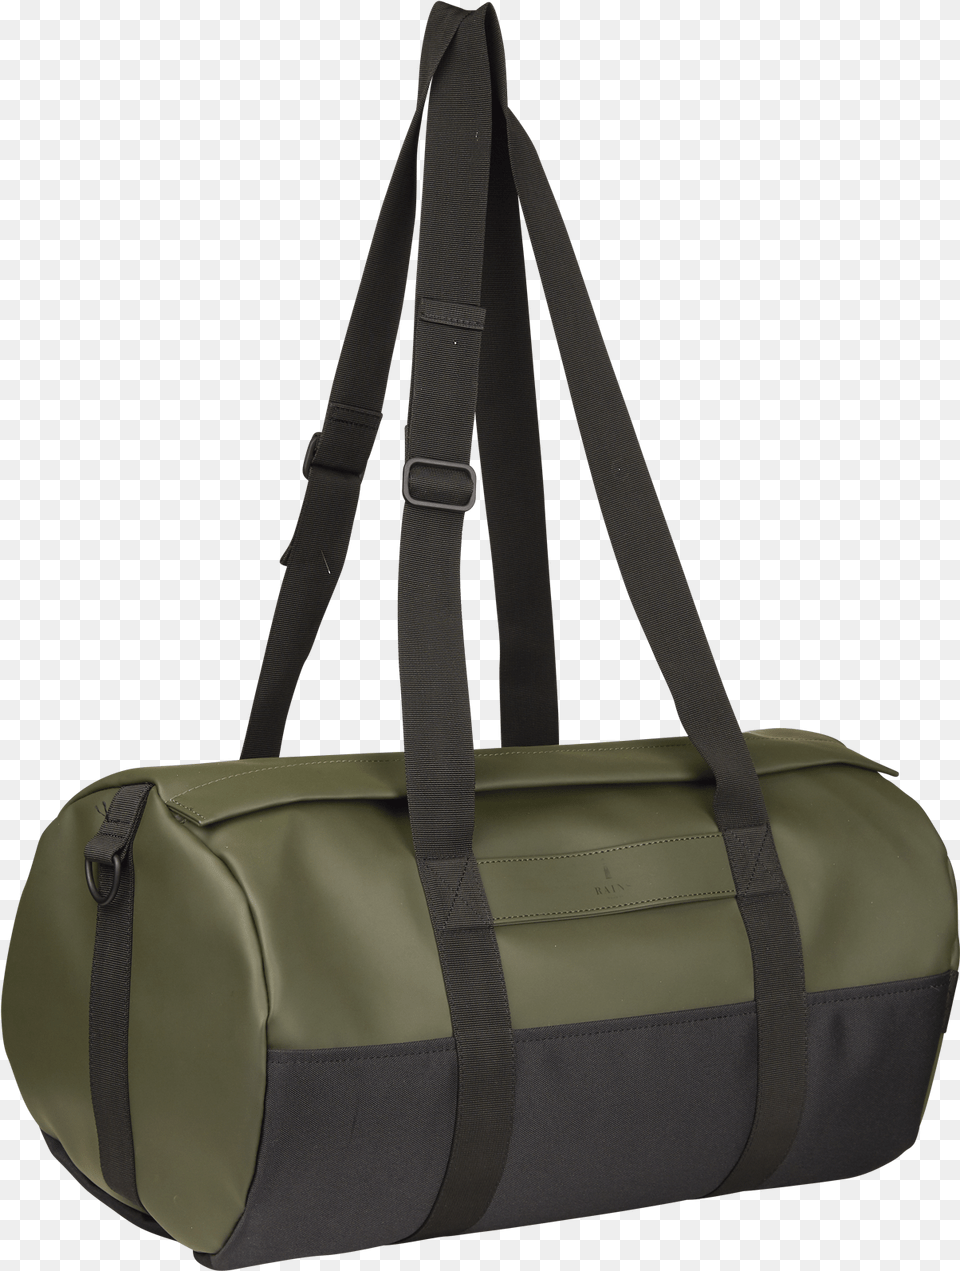 Small Travel Bags For Ladies Duffel Bag, Accessories, Handbag, Tote Bag, Baggage Free Transparent Png